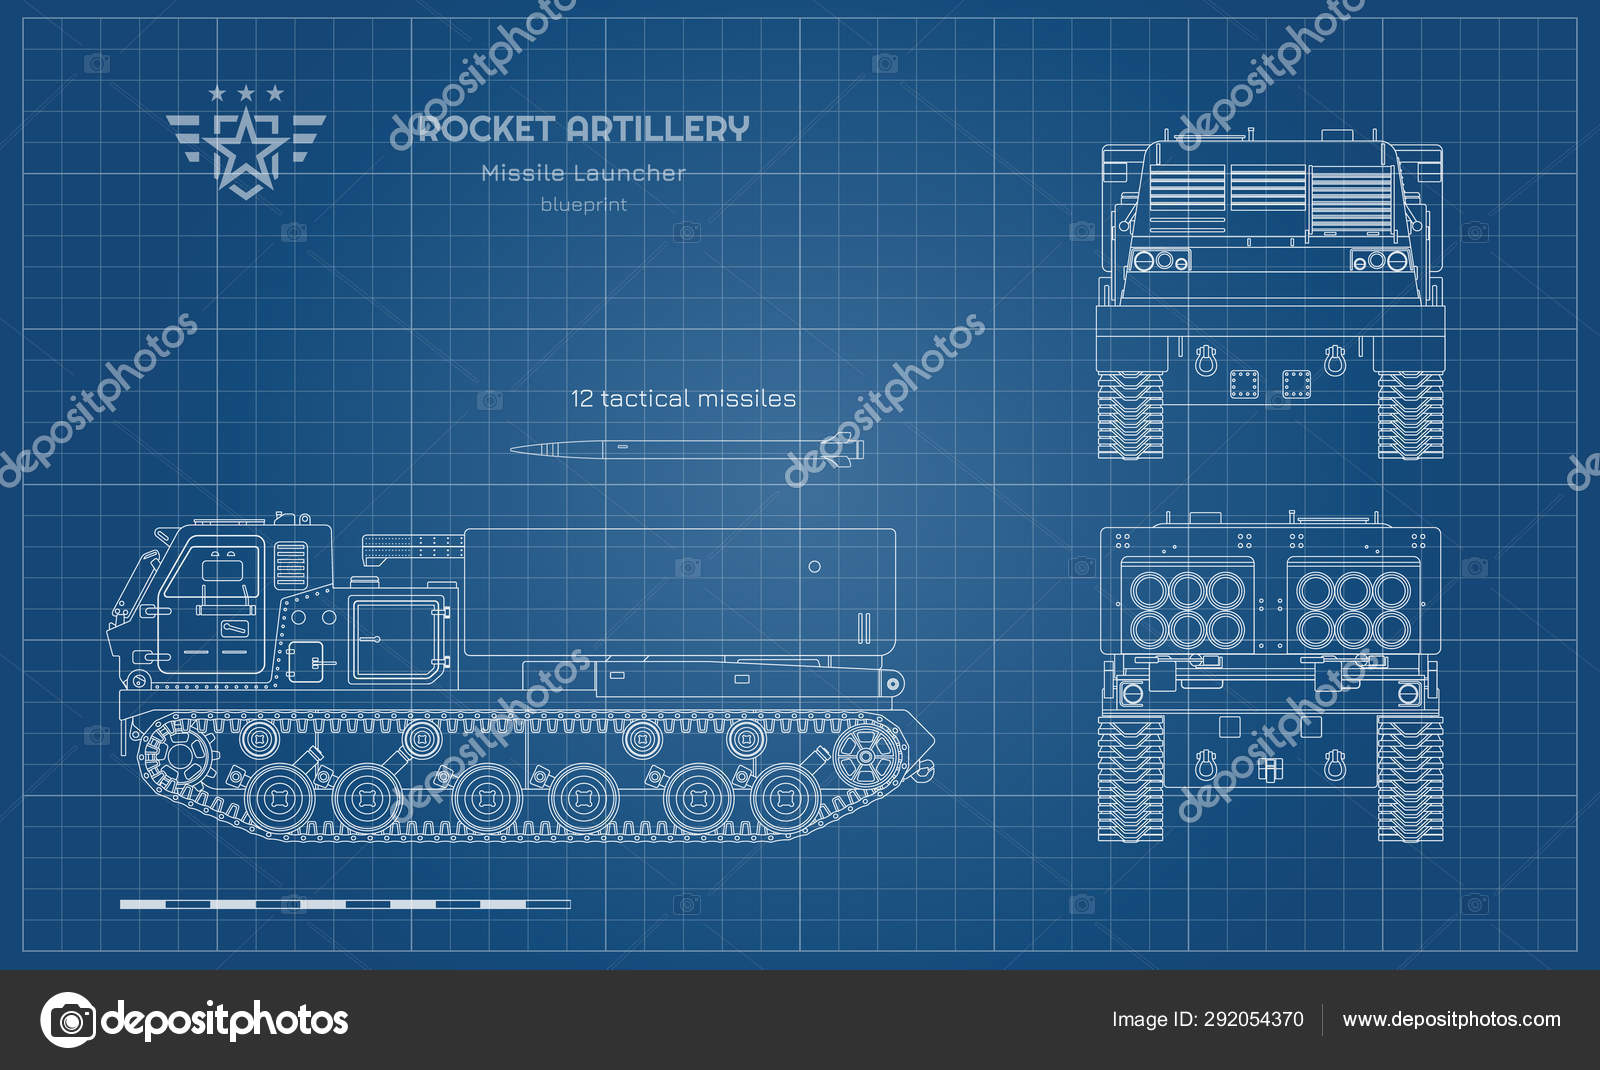 depositphotos_292054370-stock-illustration-outline-blueprint-of-missile-vehicle.jpg